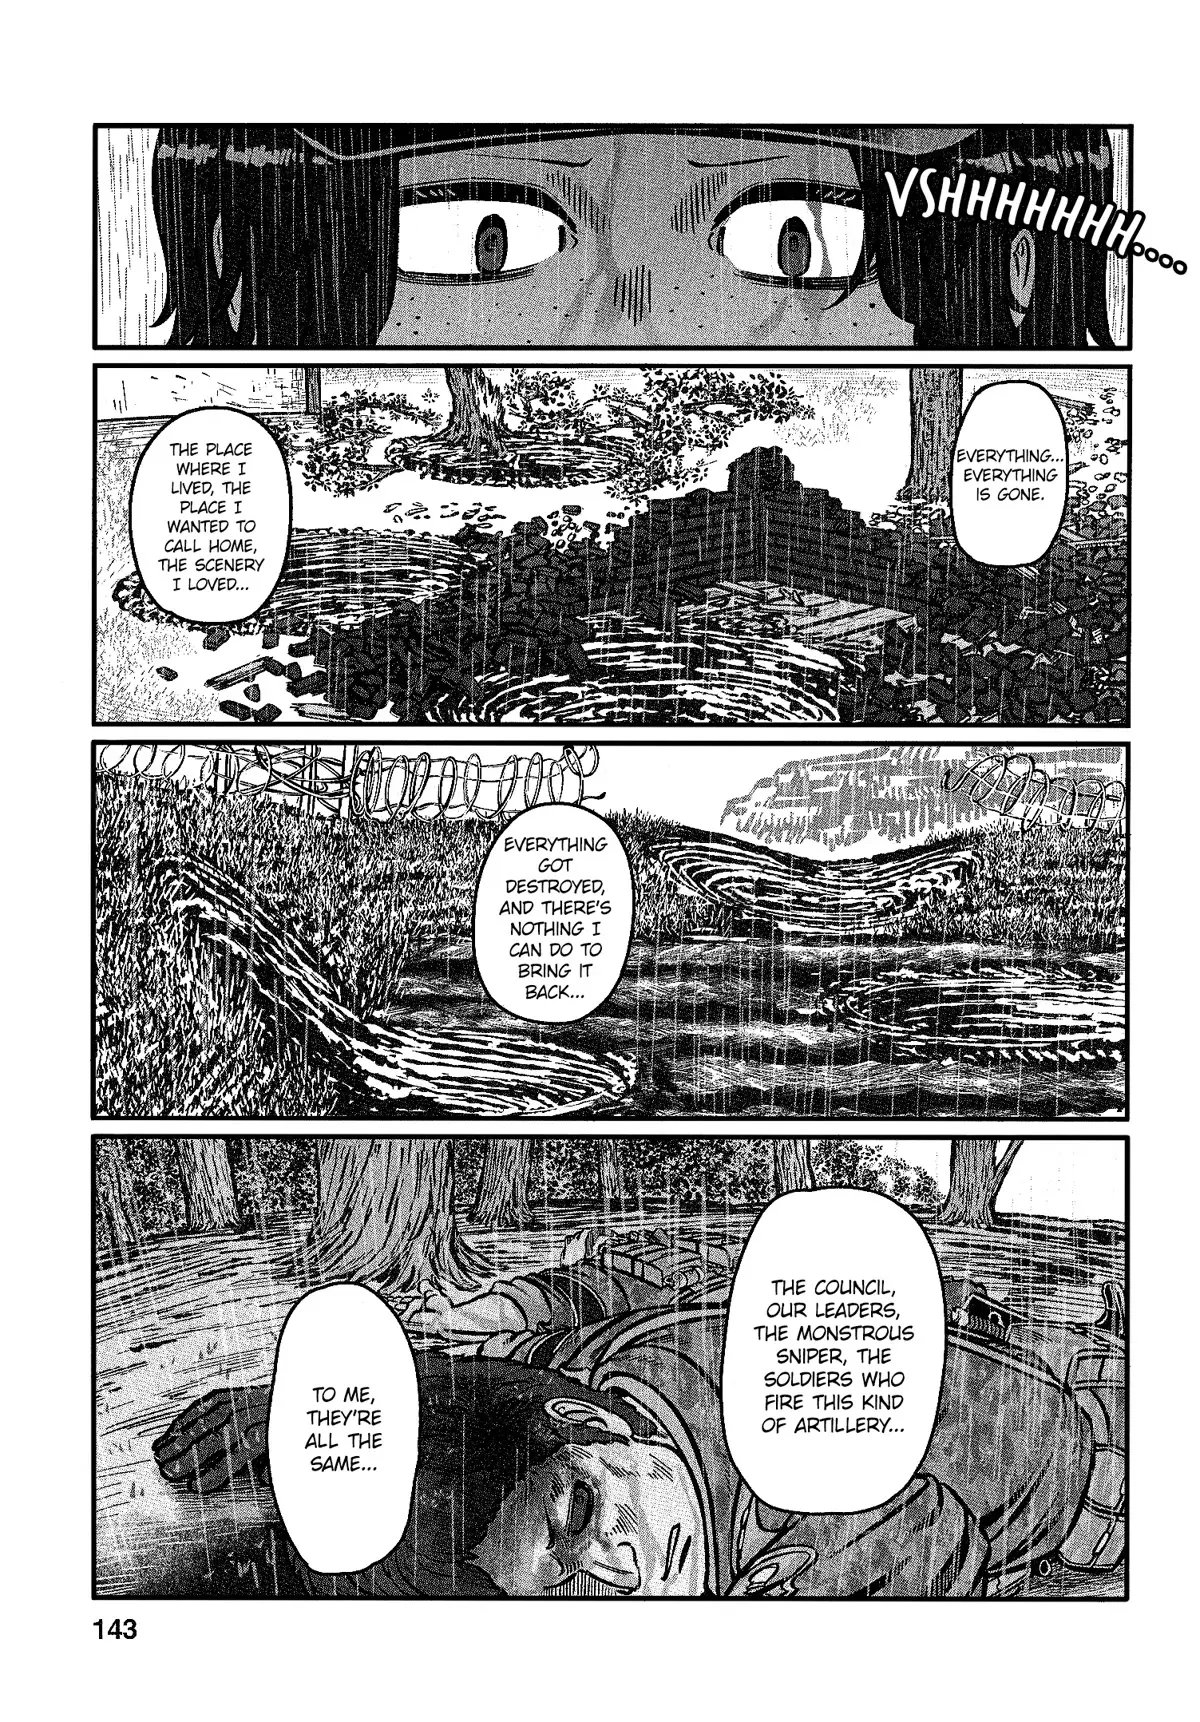 Groundless - Sekigan No Sogekihei - 29 page 1-12b70e96